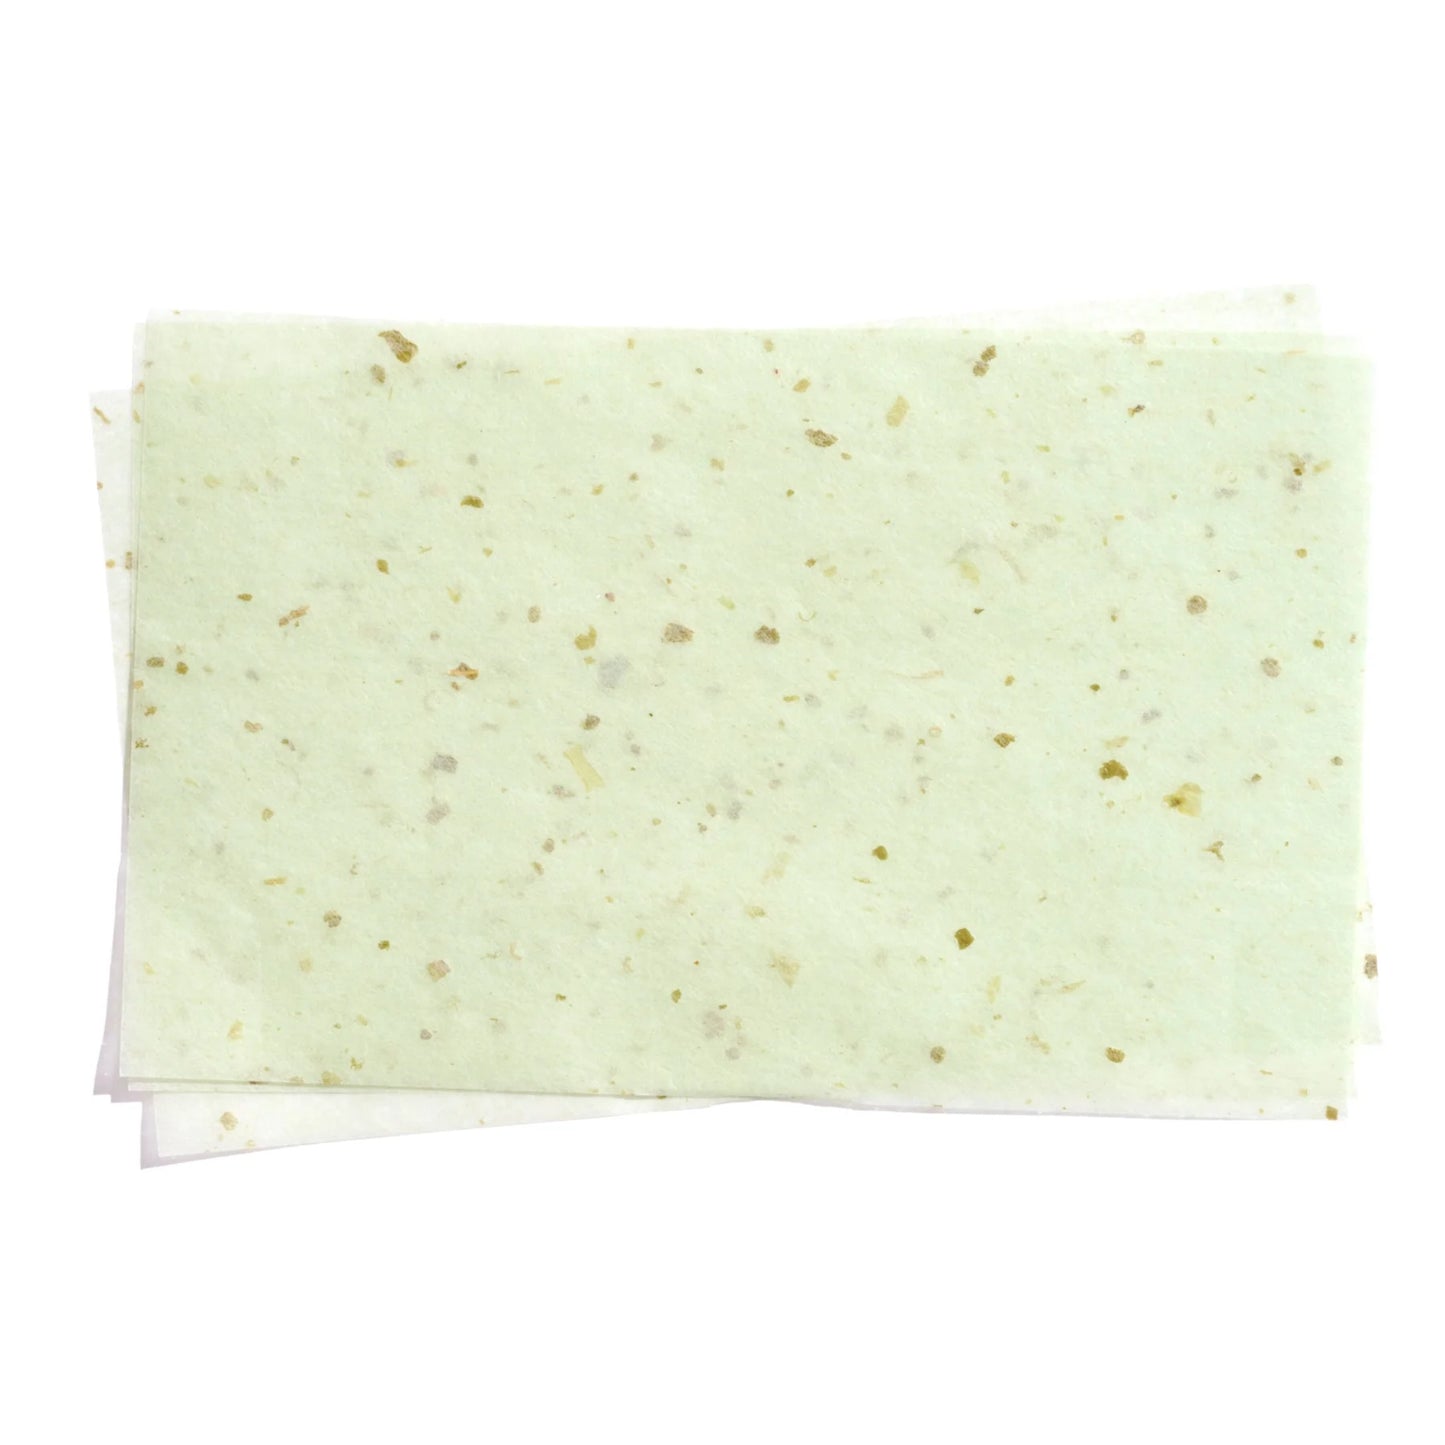 Beauty Creations Oily Who? - Green Tea Blotting Paper 3pc Bundle